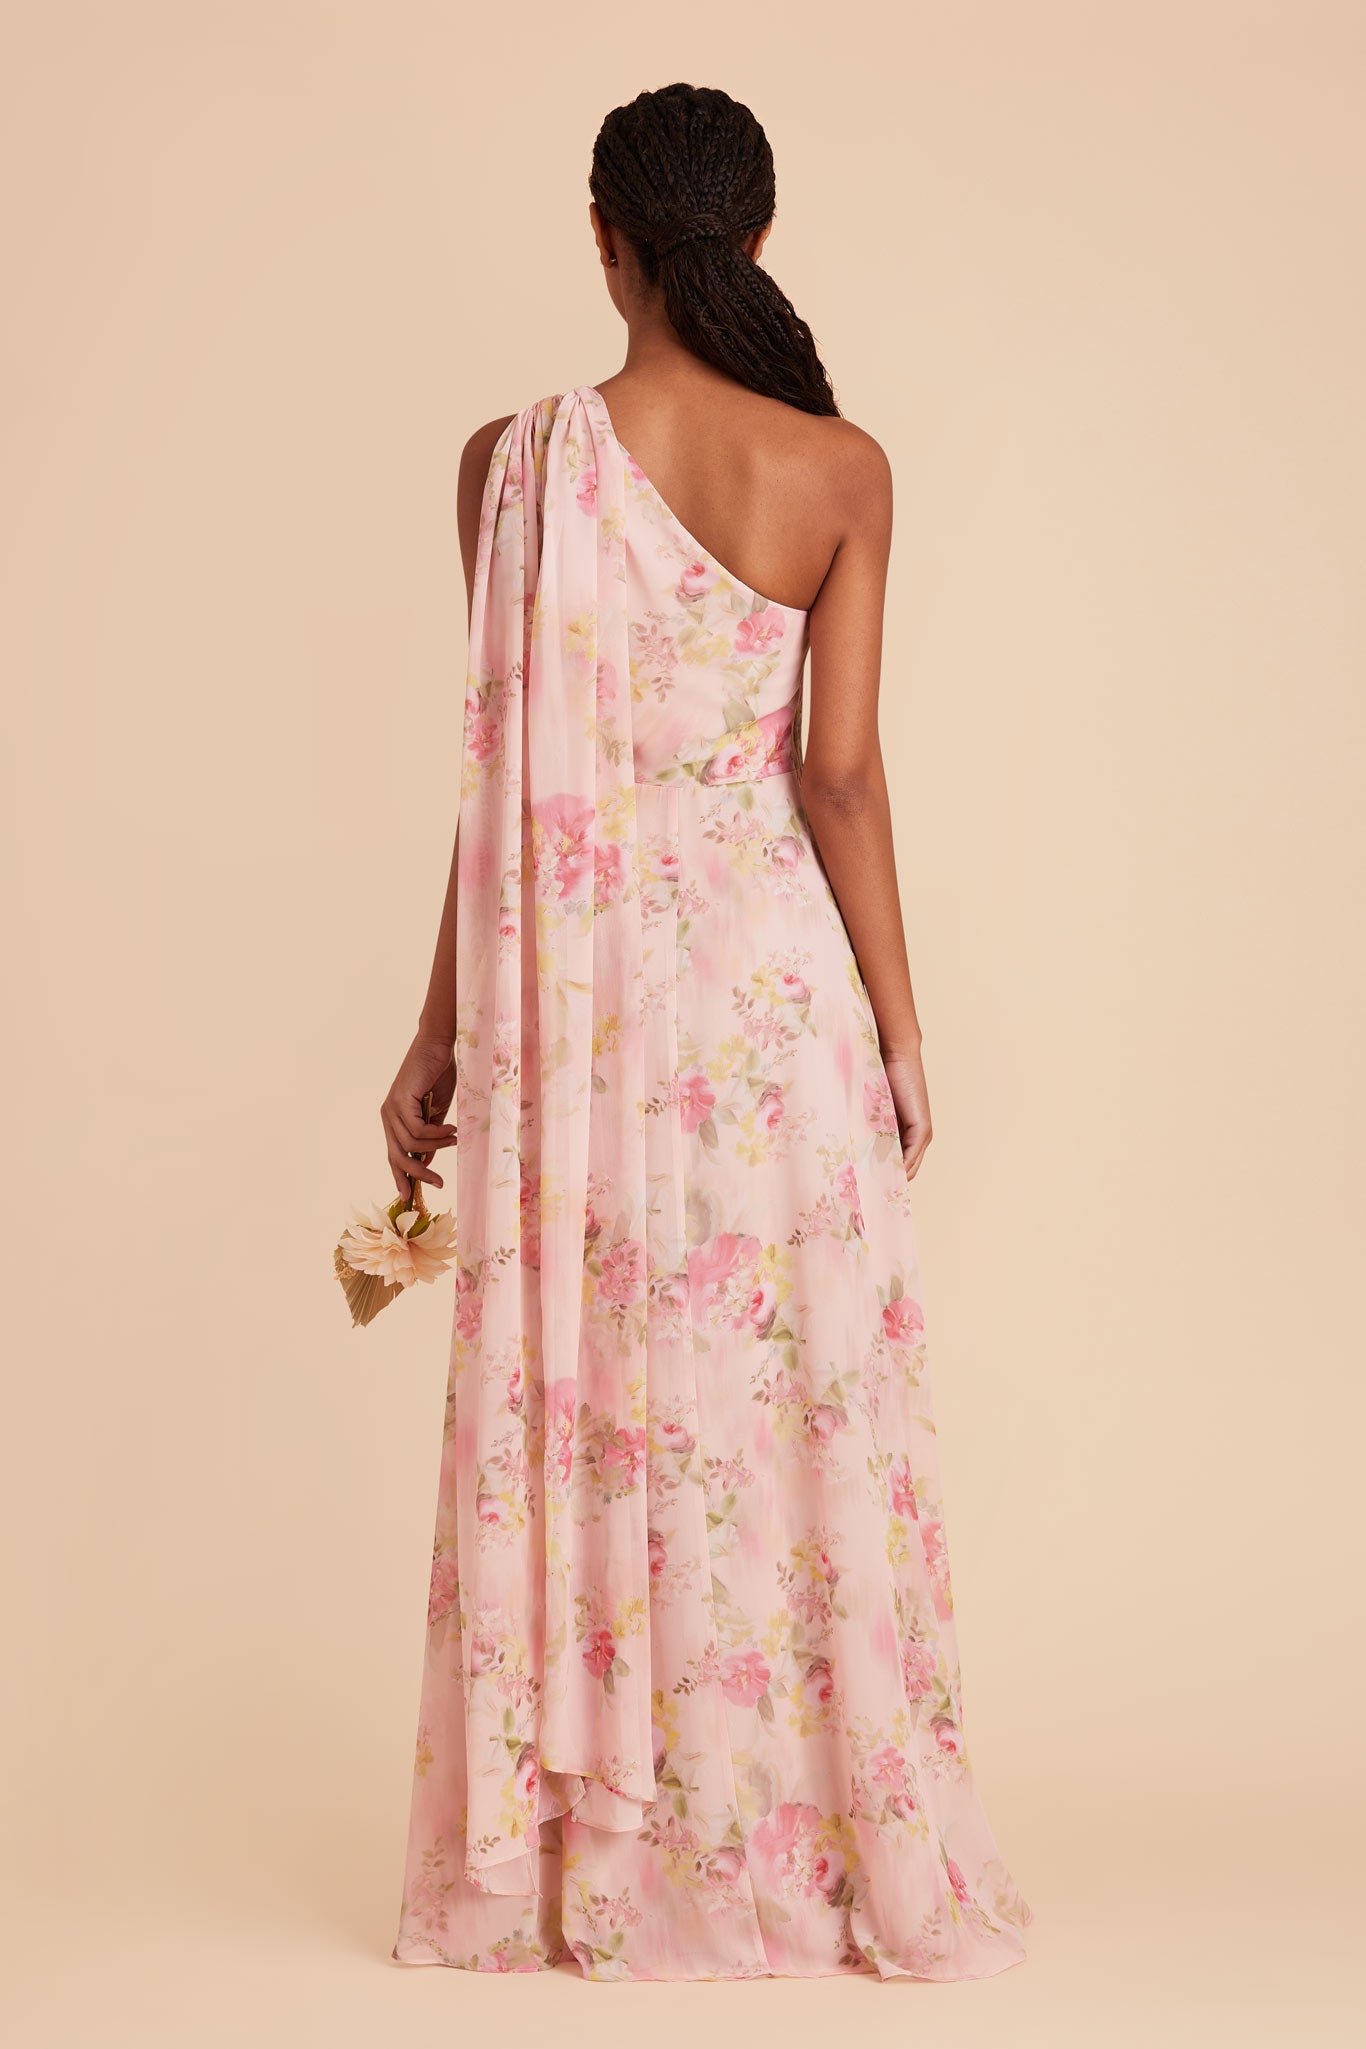 Vintage Pink Floral Melissa Chiffon Dress by Birdy Grey